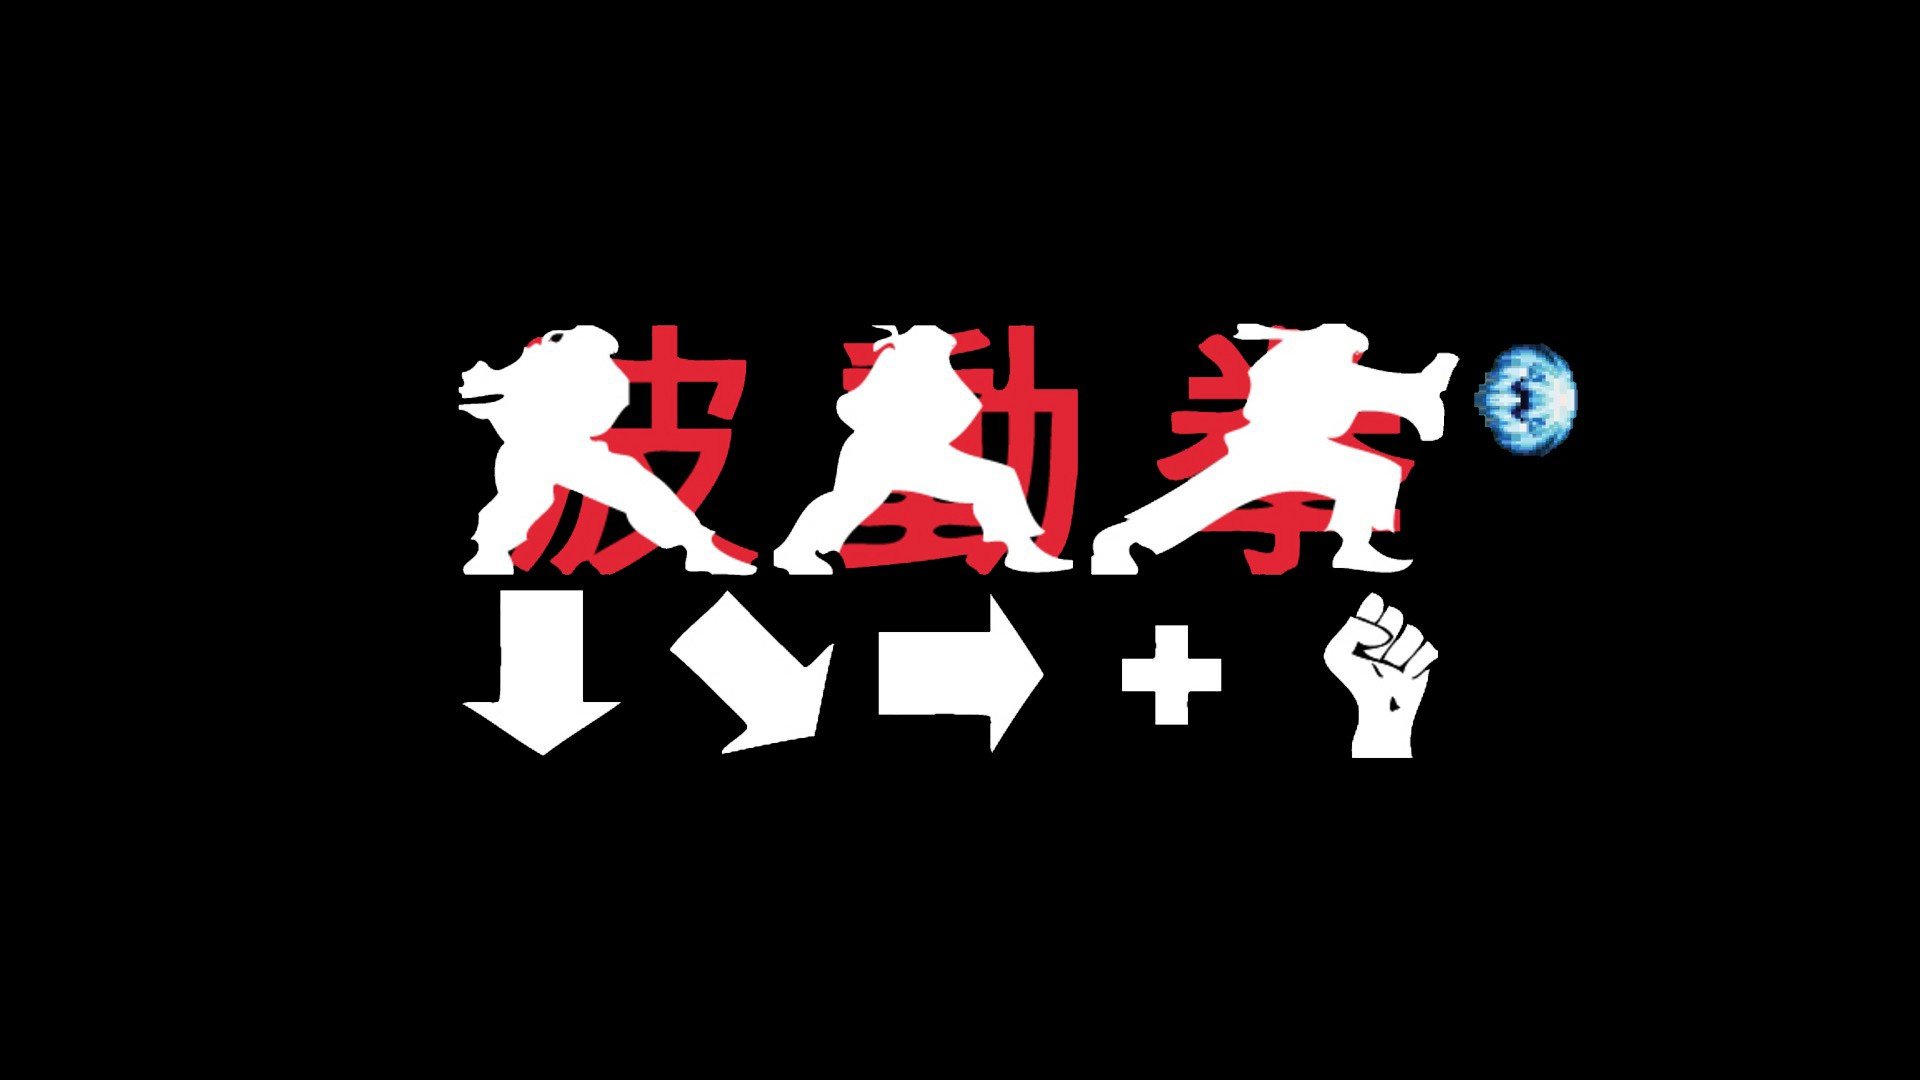 Hadouken, Street Fighter, Ryu (Street Fighter) Wallpaper